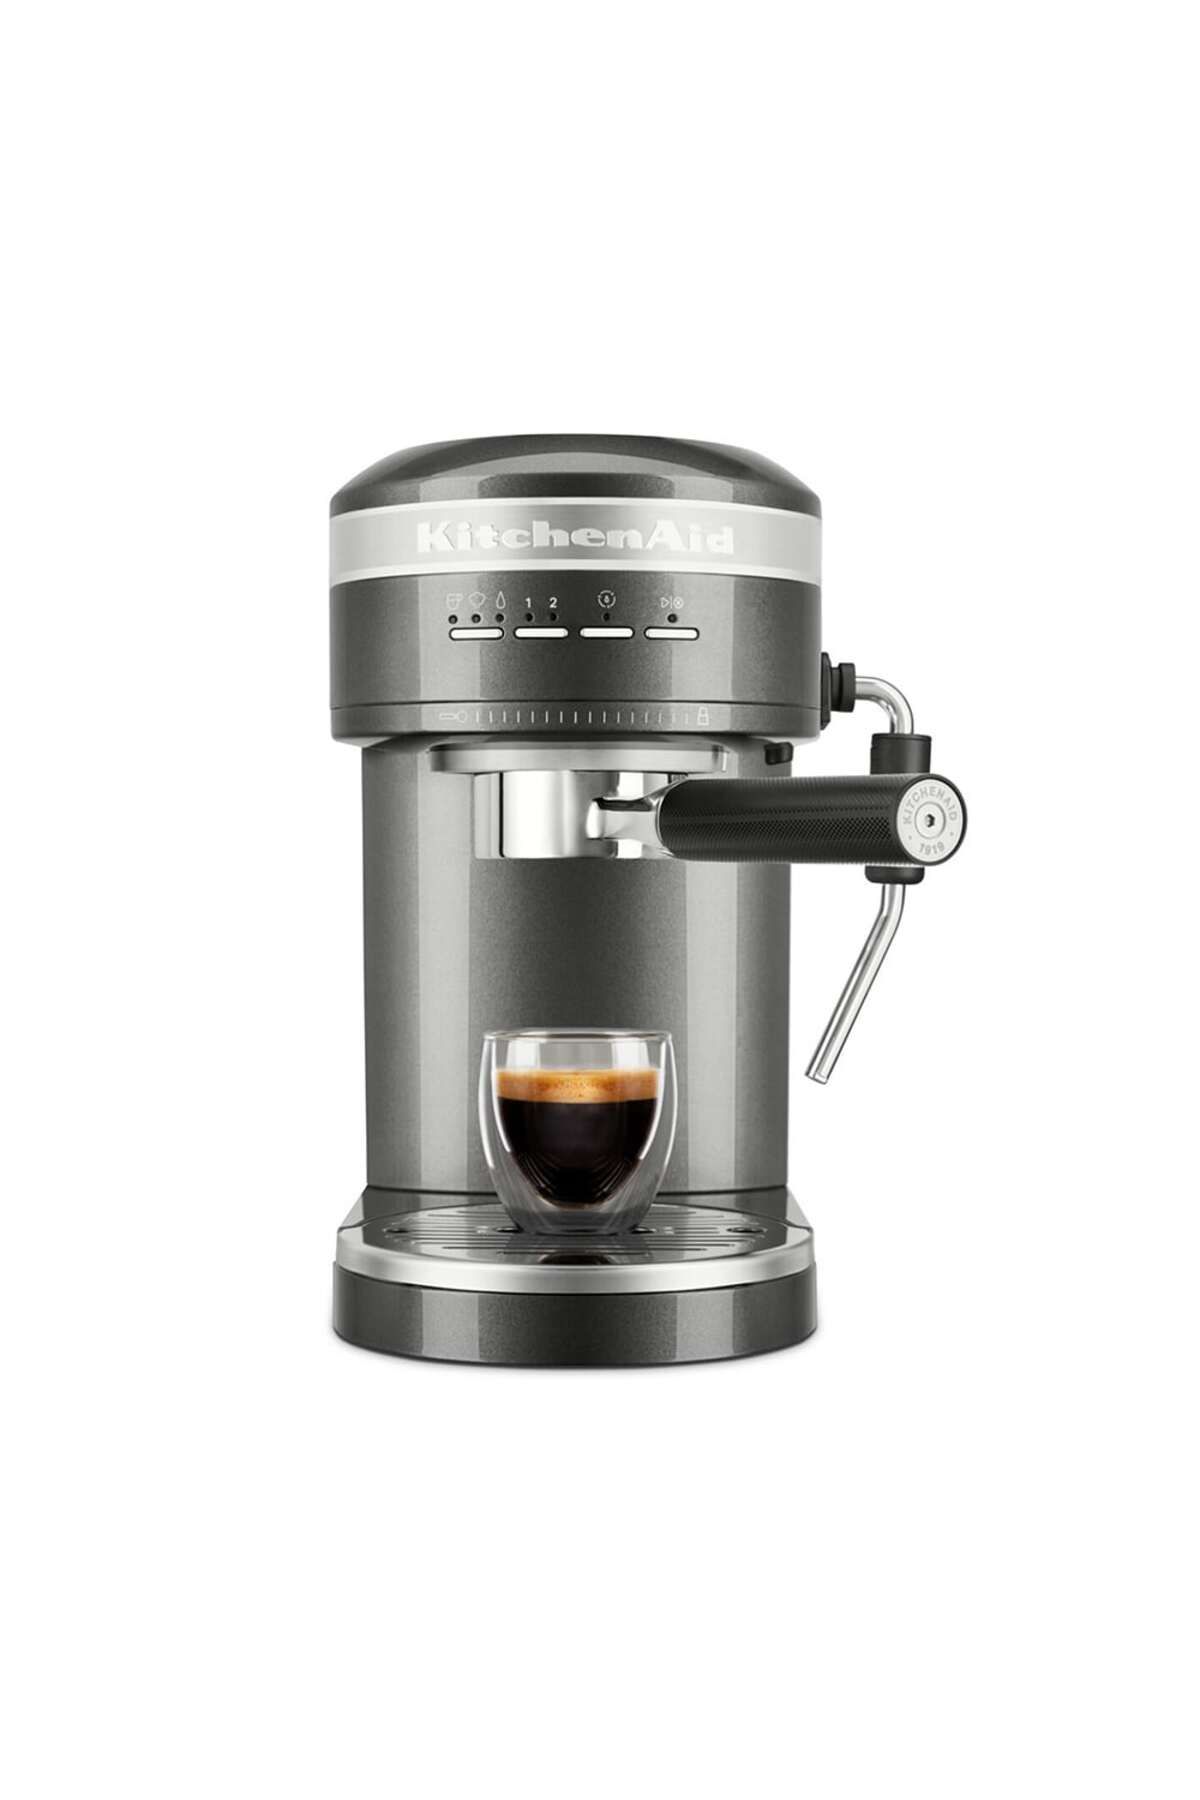 Kitchenaid Artisan Proline Espresso Makinesi 5kes6503eob